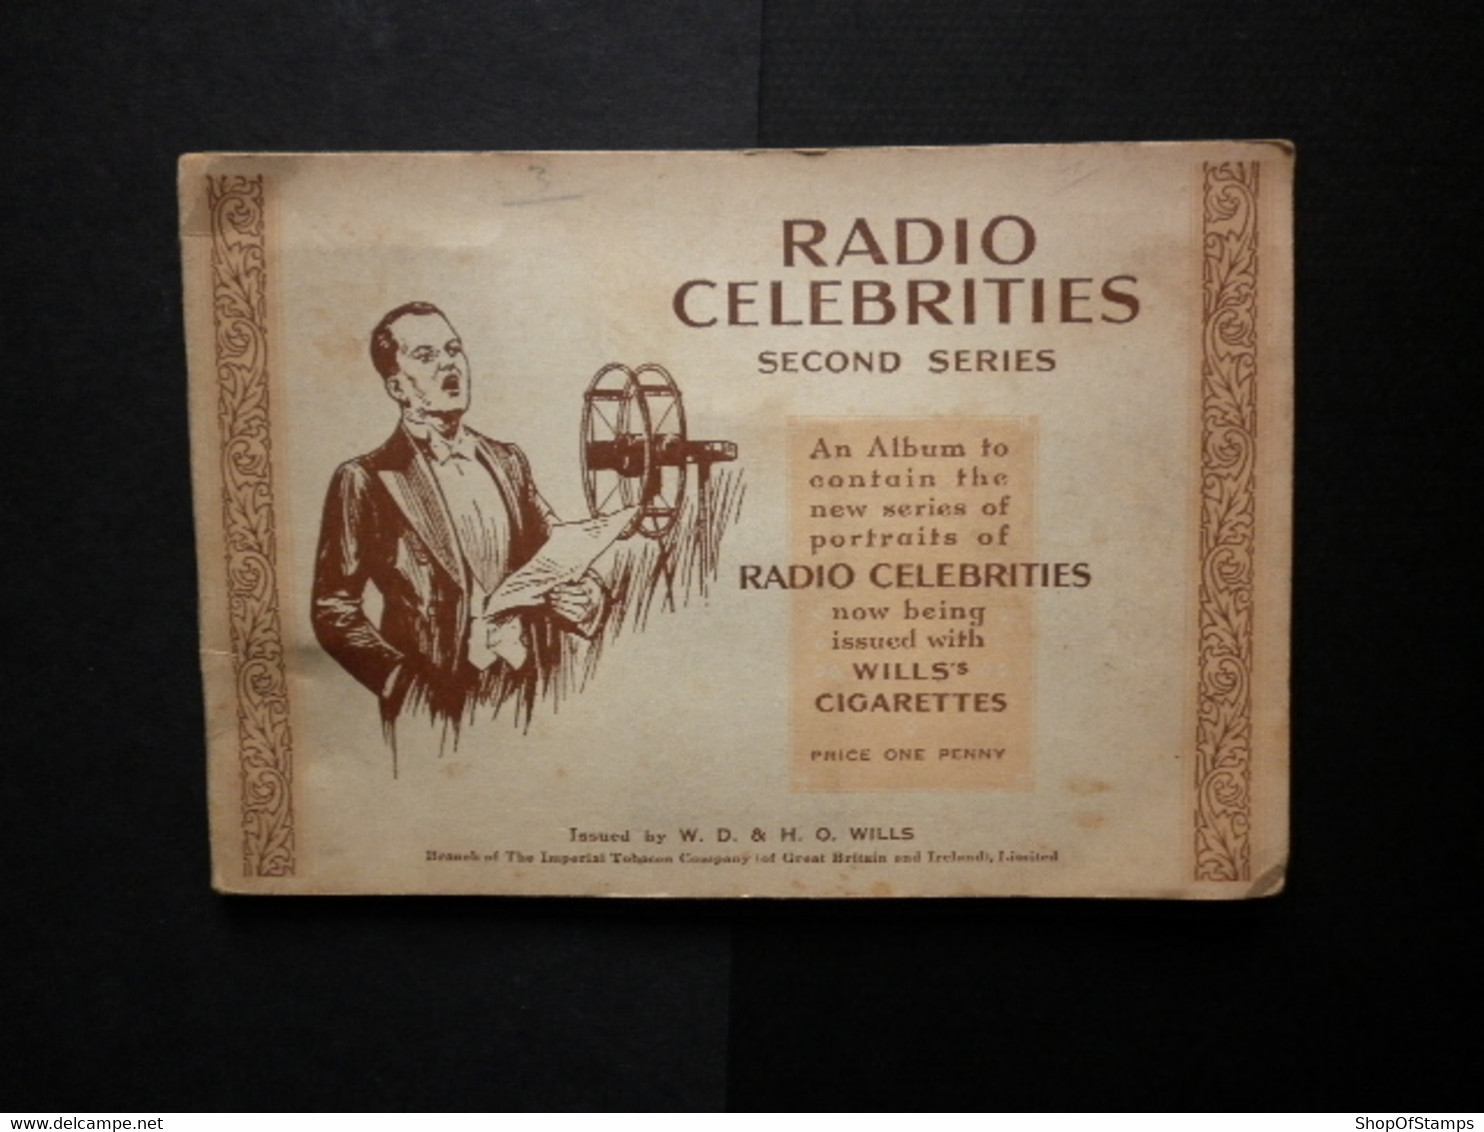 CIGARETTES CARDS RADIO CELBEBRITIES 47/50 - Player's